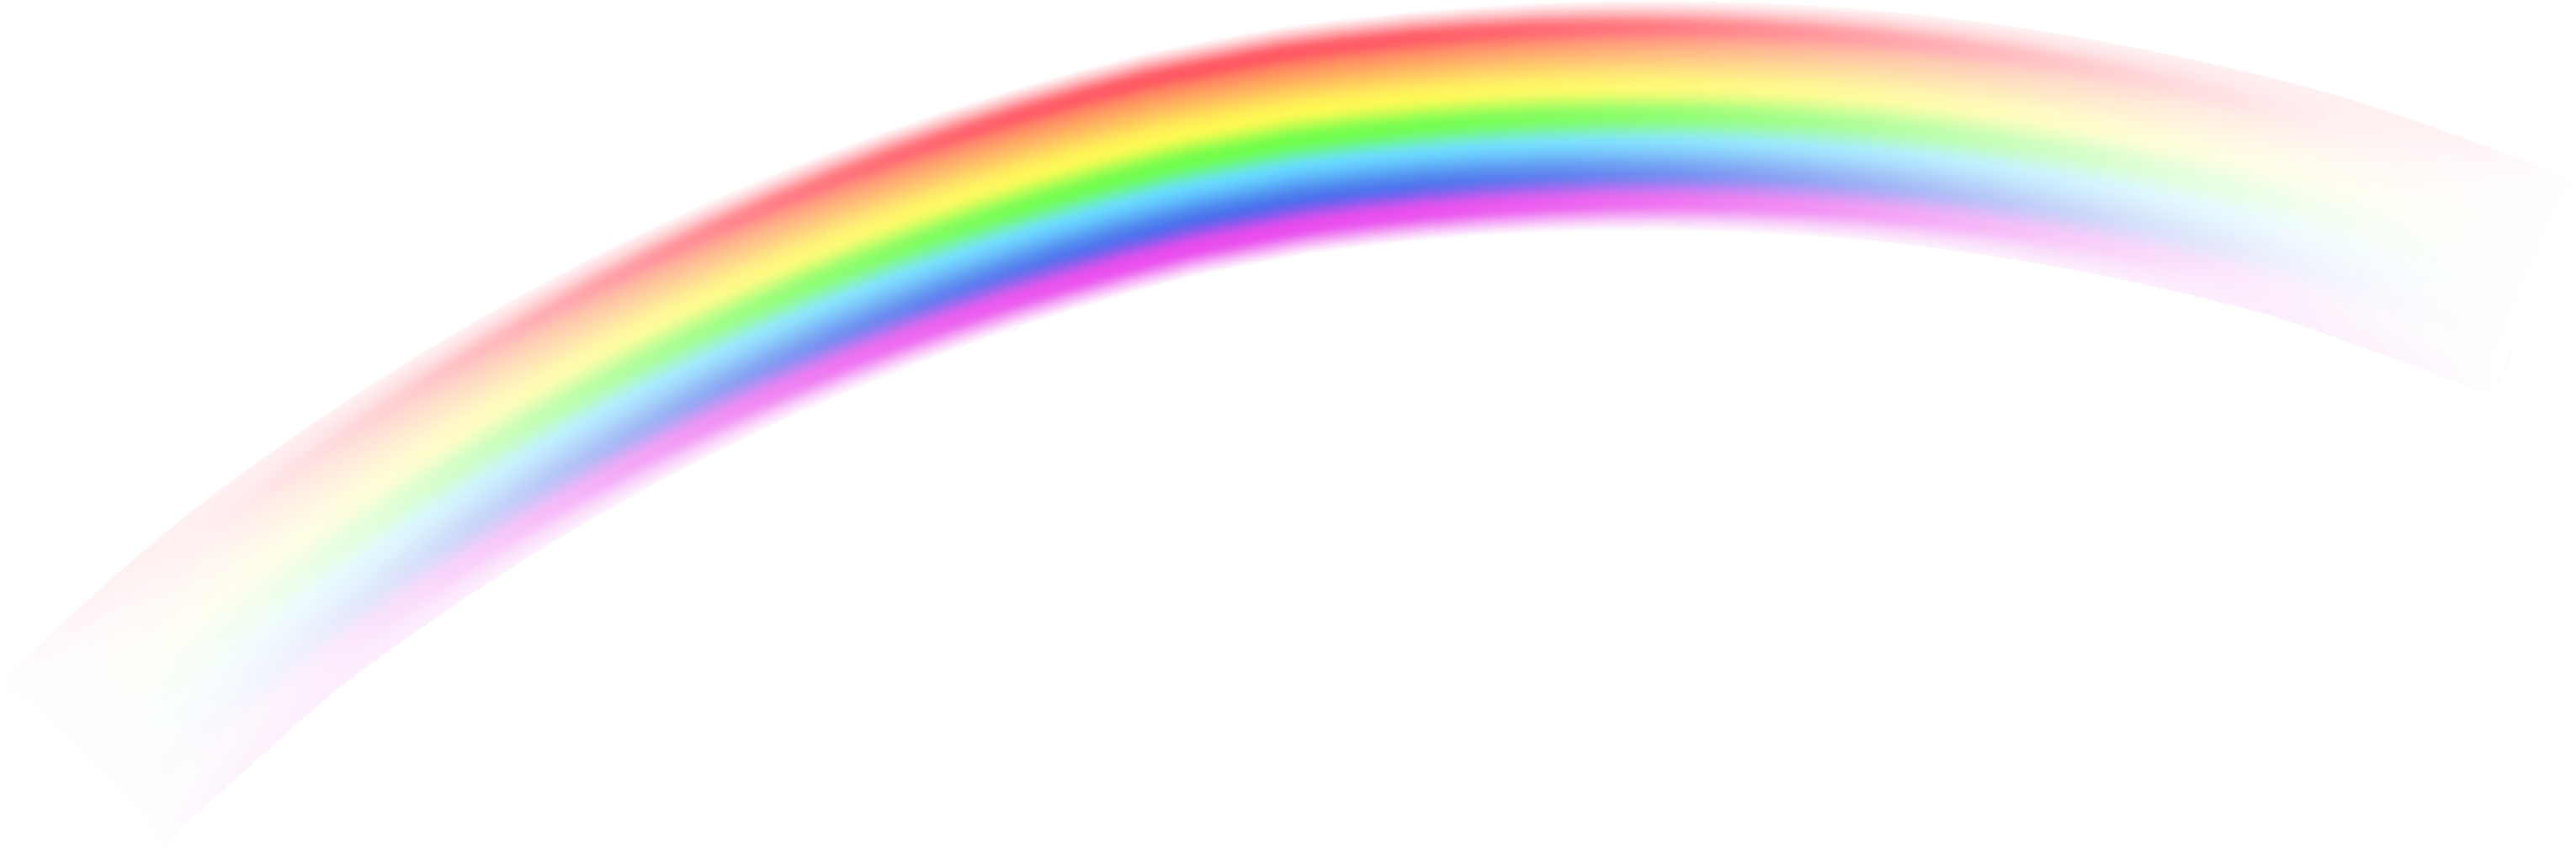 Rainbow Rays Illustration